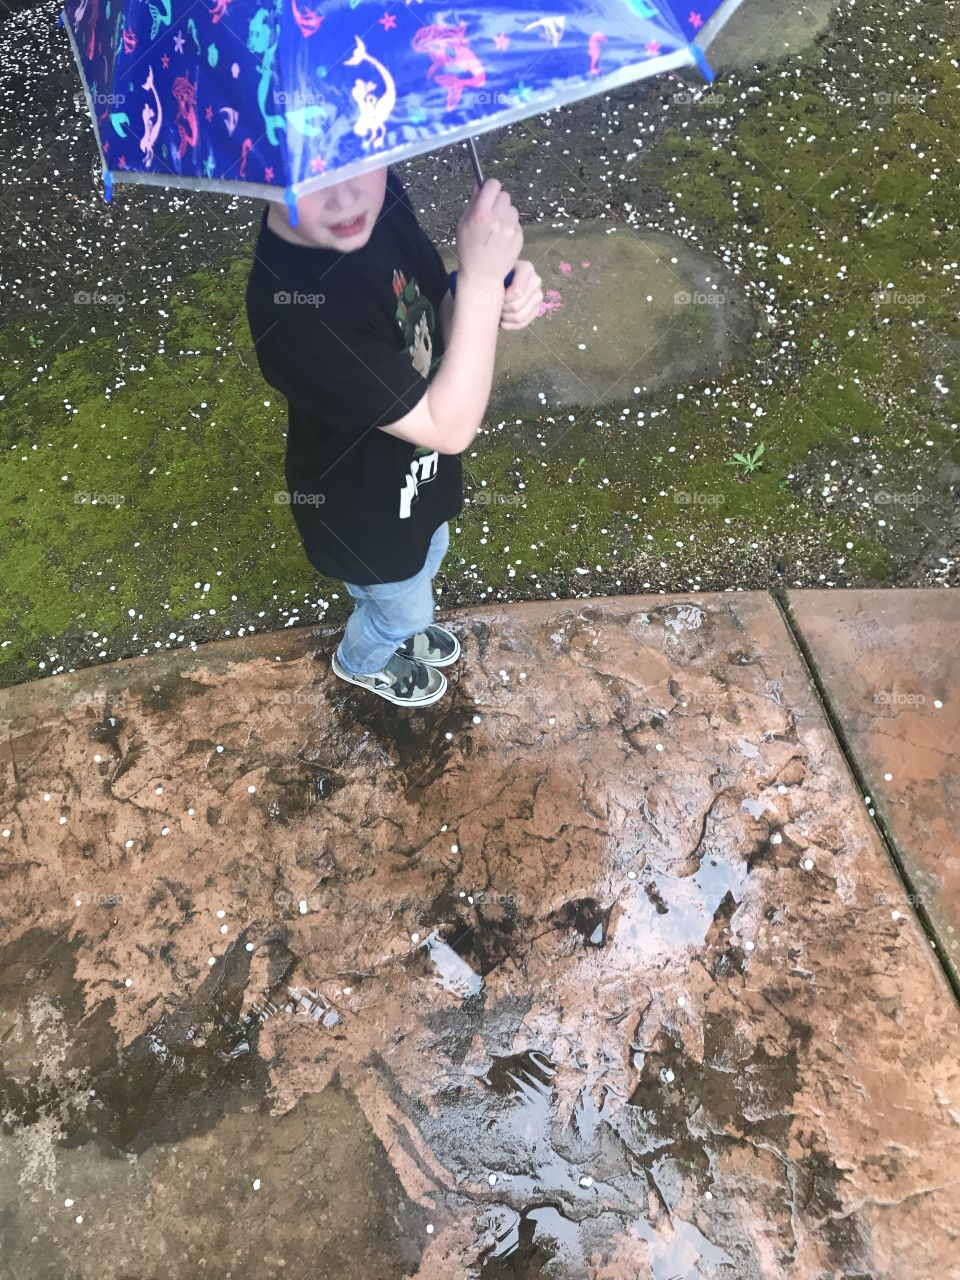 Little boy In the rain with an umbrella 